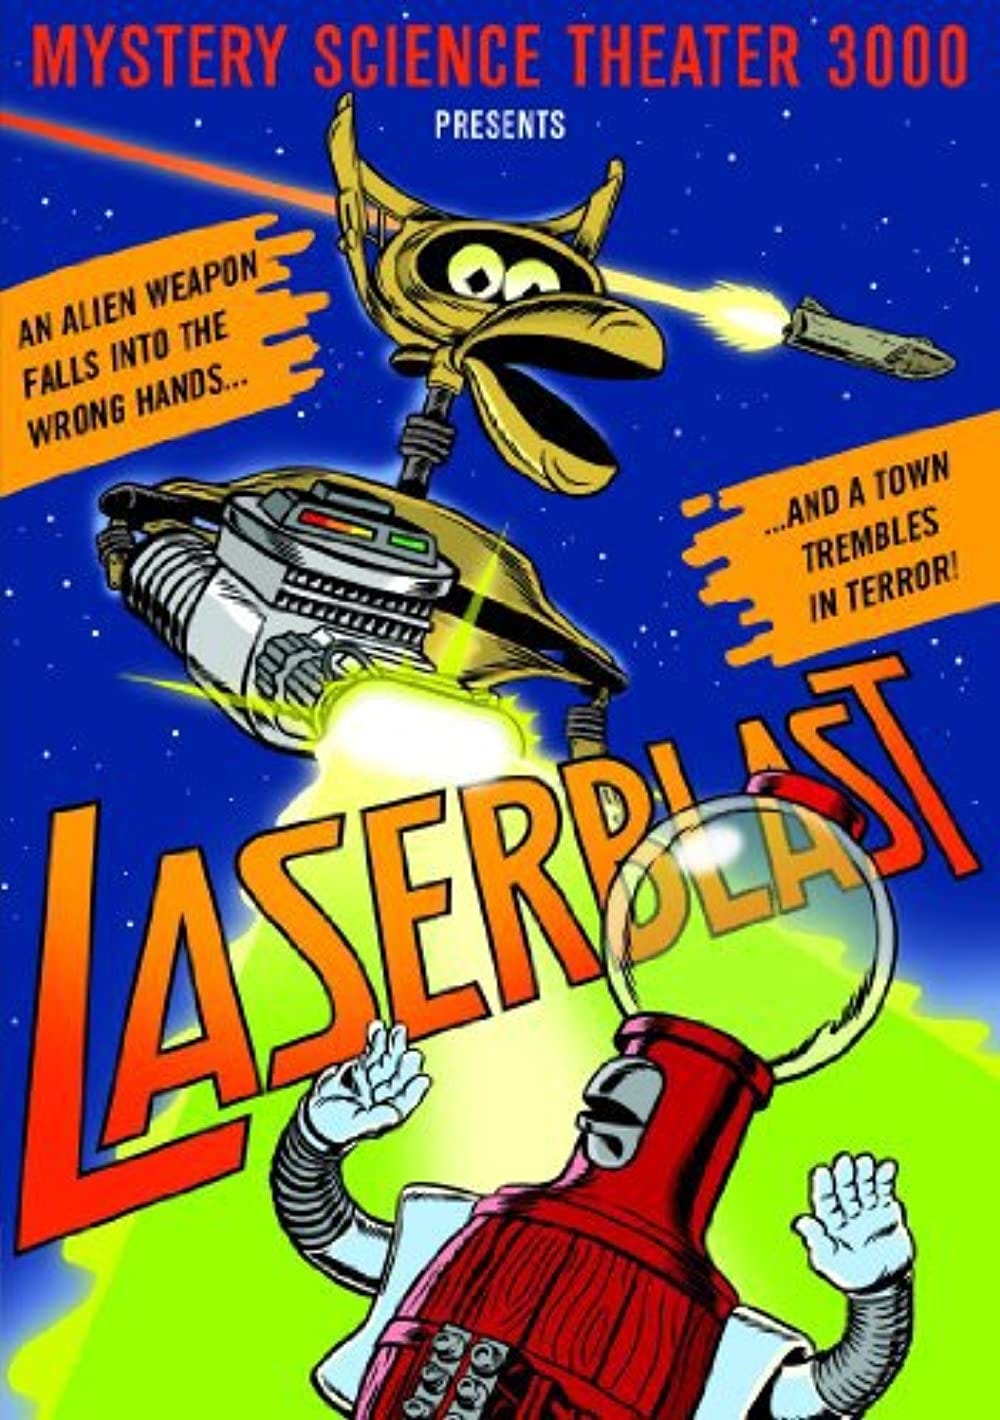 A poster for the LASERBLAST episode of MST3K.